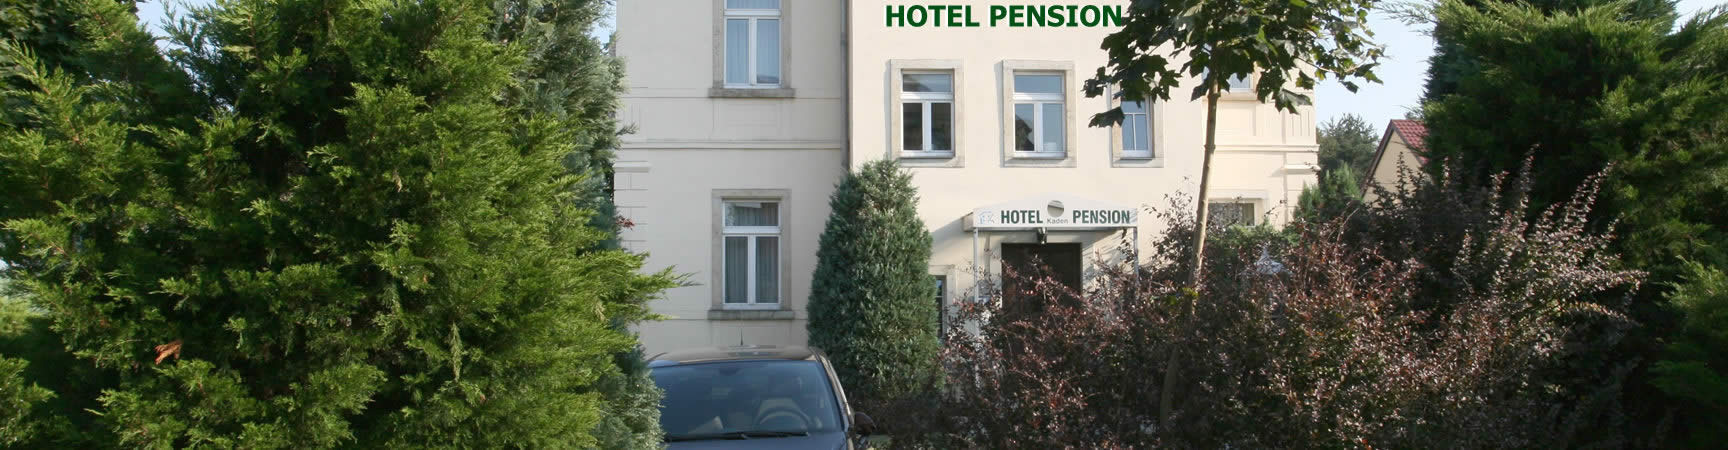 Hotel Pension in Dresden